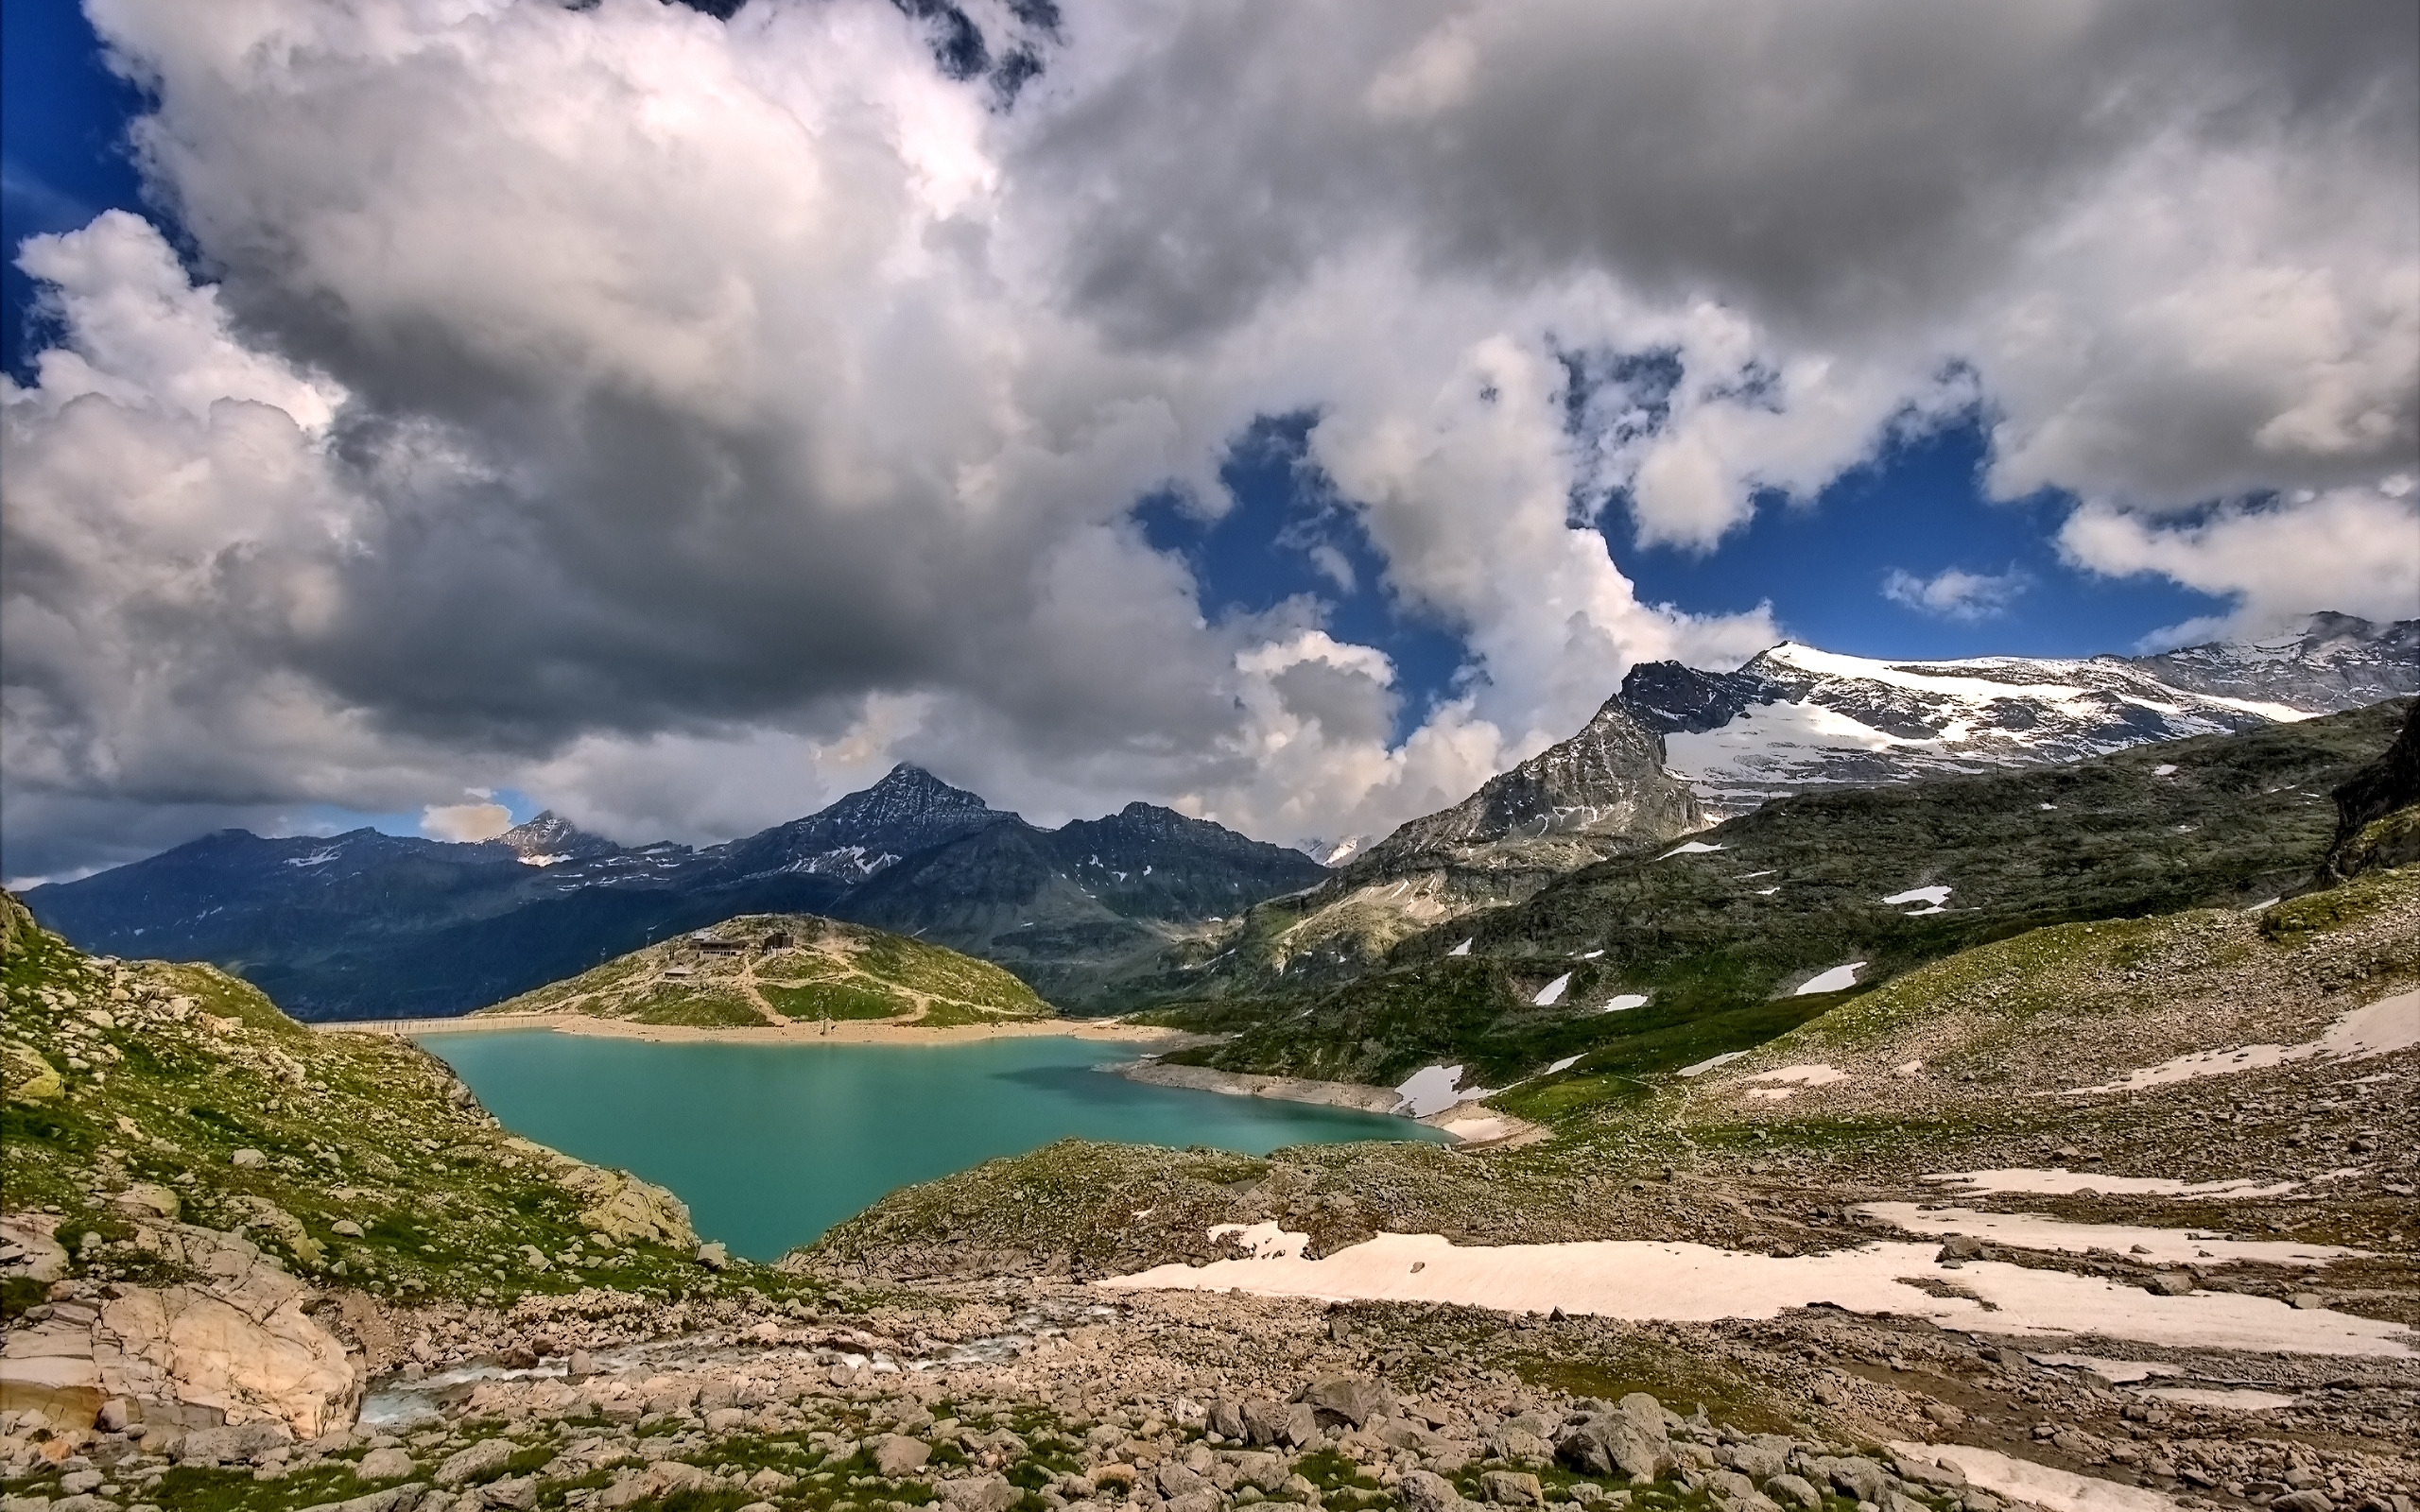 High Alpine Landscape for 2560 x 1600 widescreen resolution